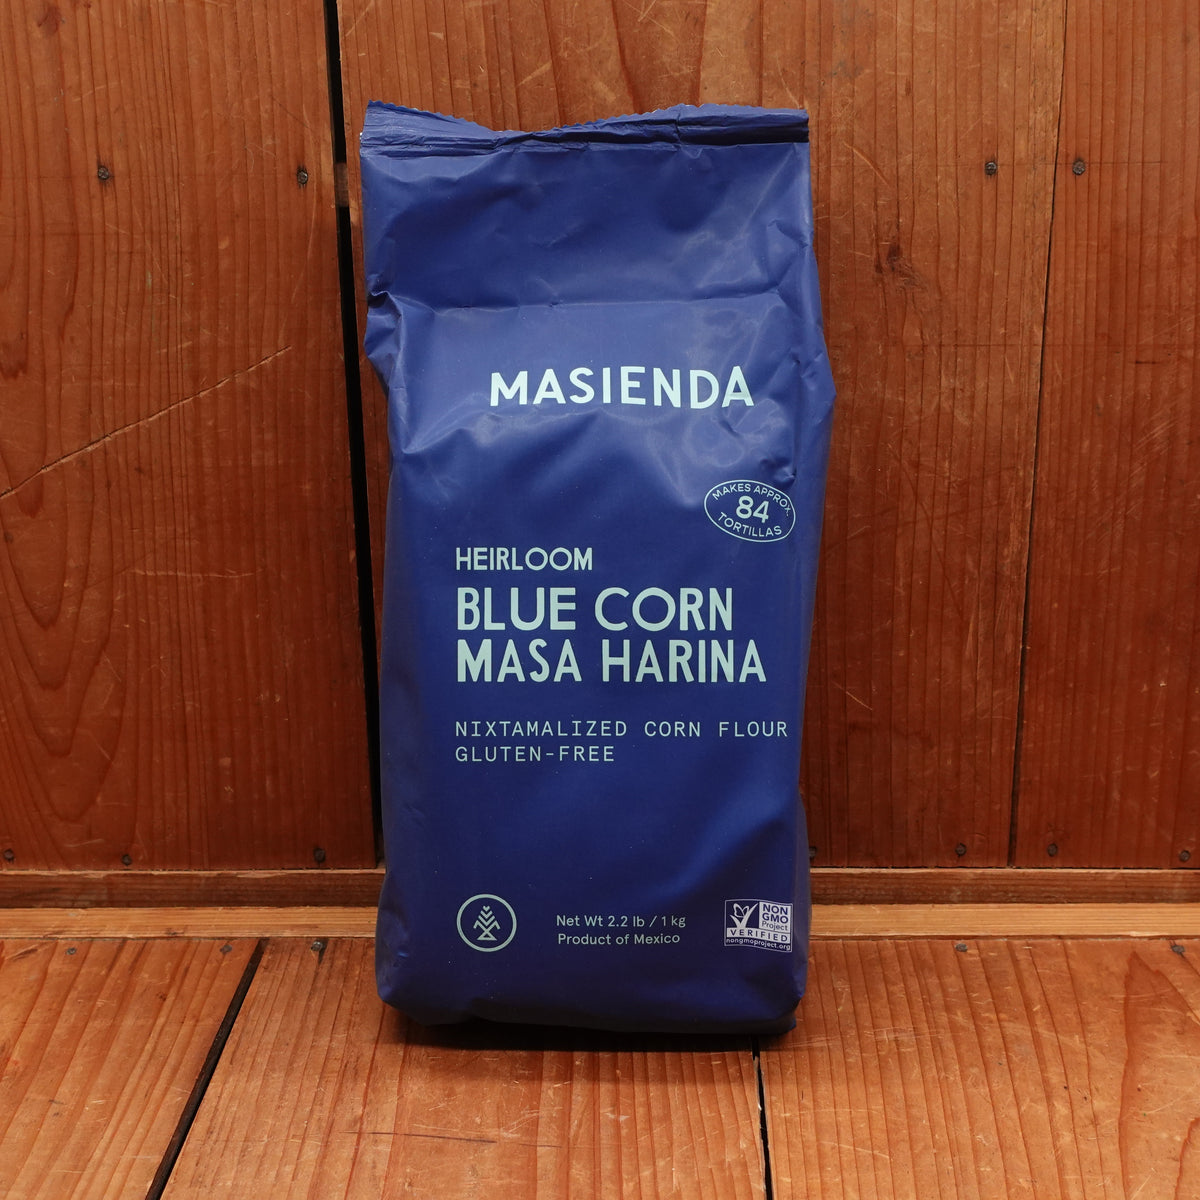 Masienda Heirloom Blue Corn Masa Harina - 1kg